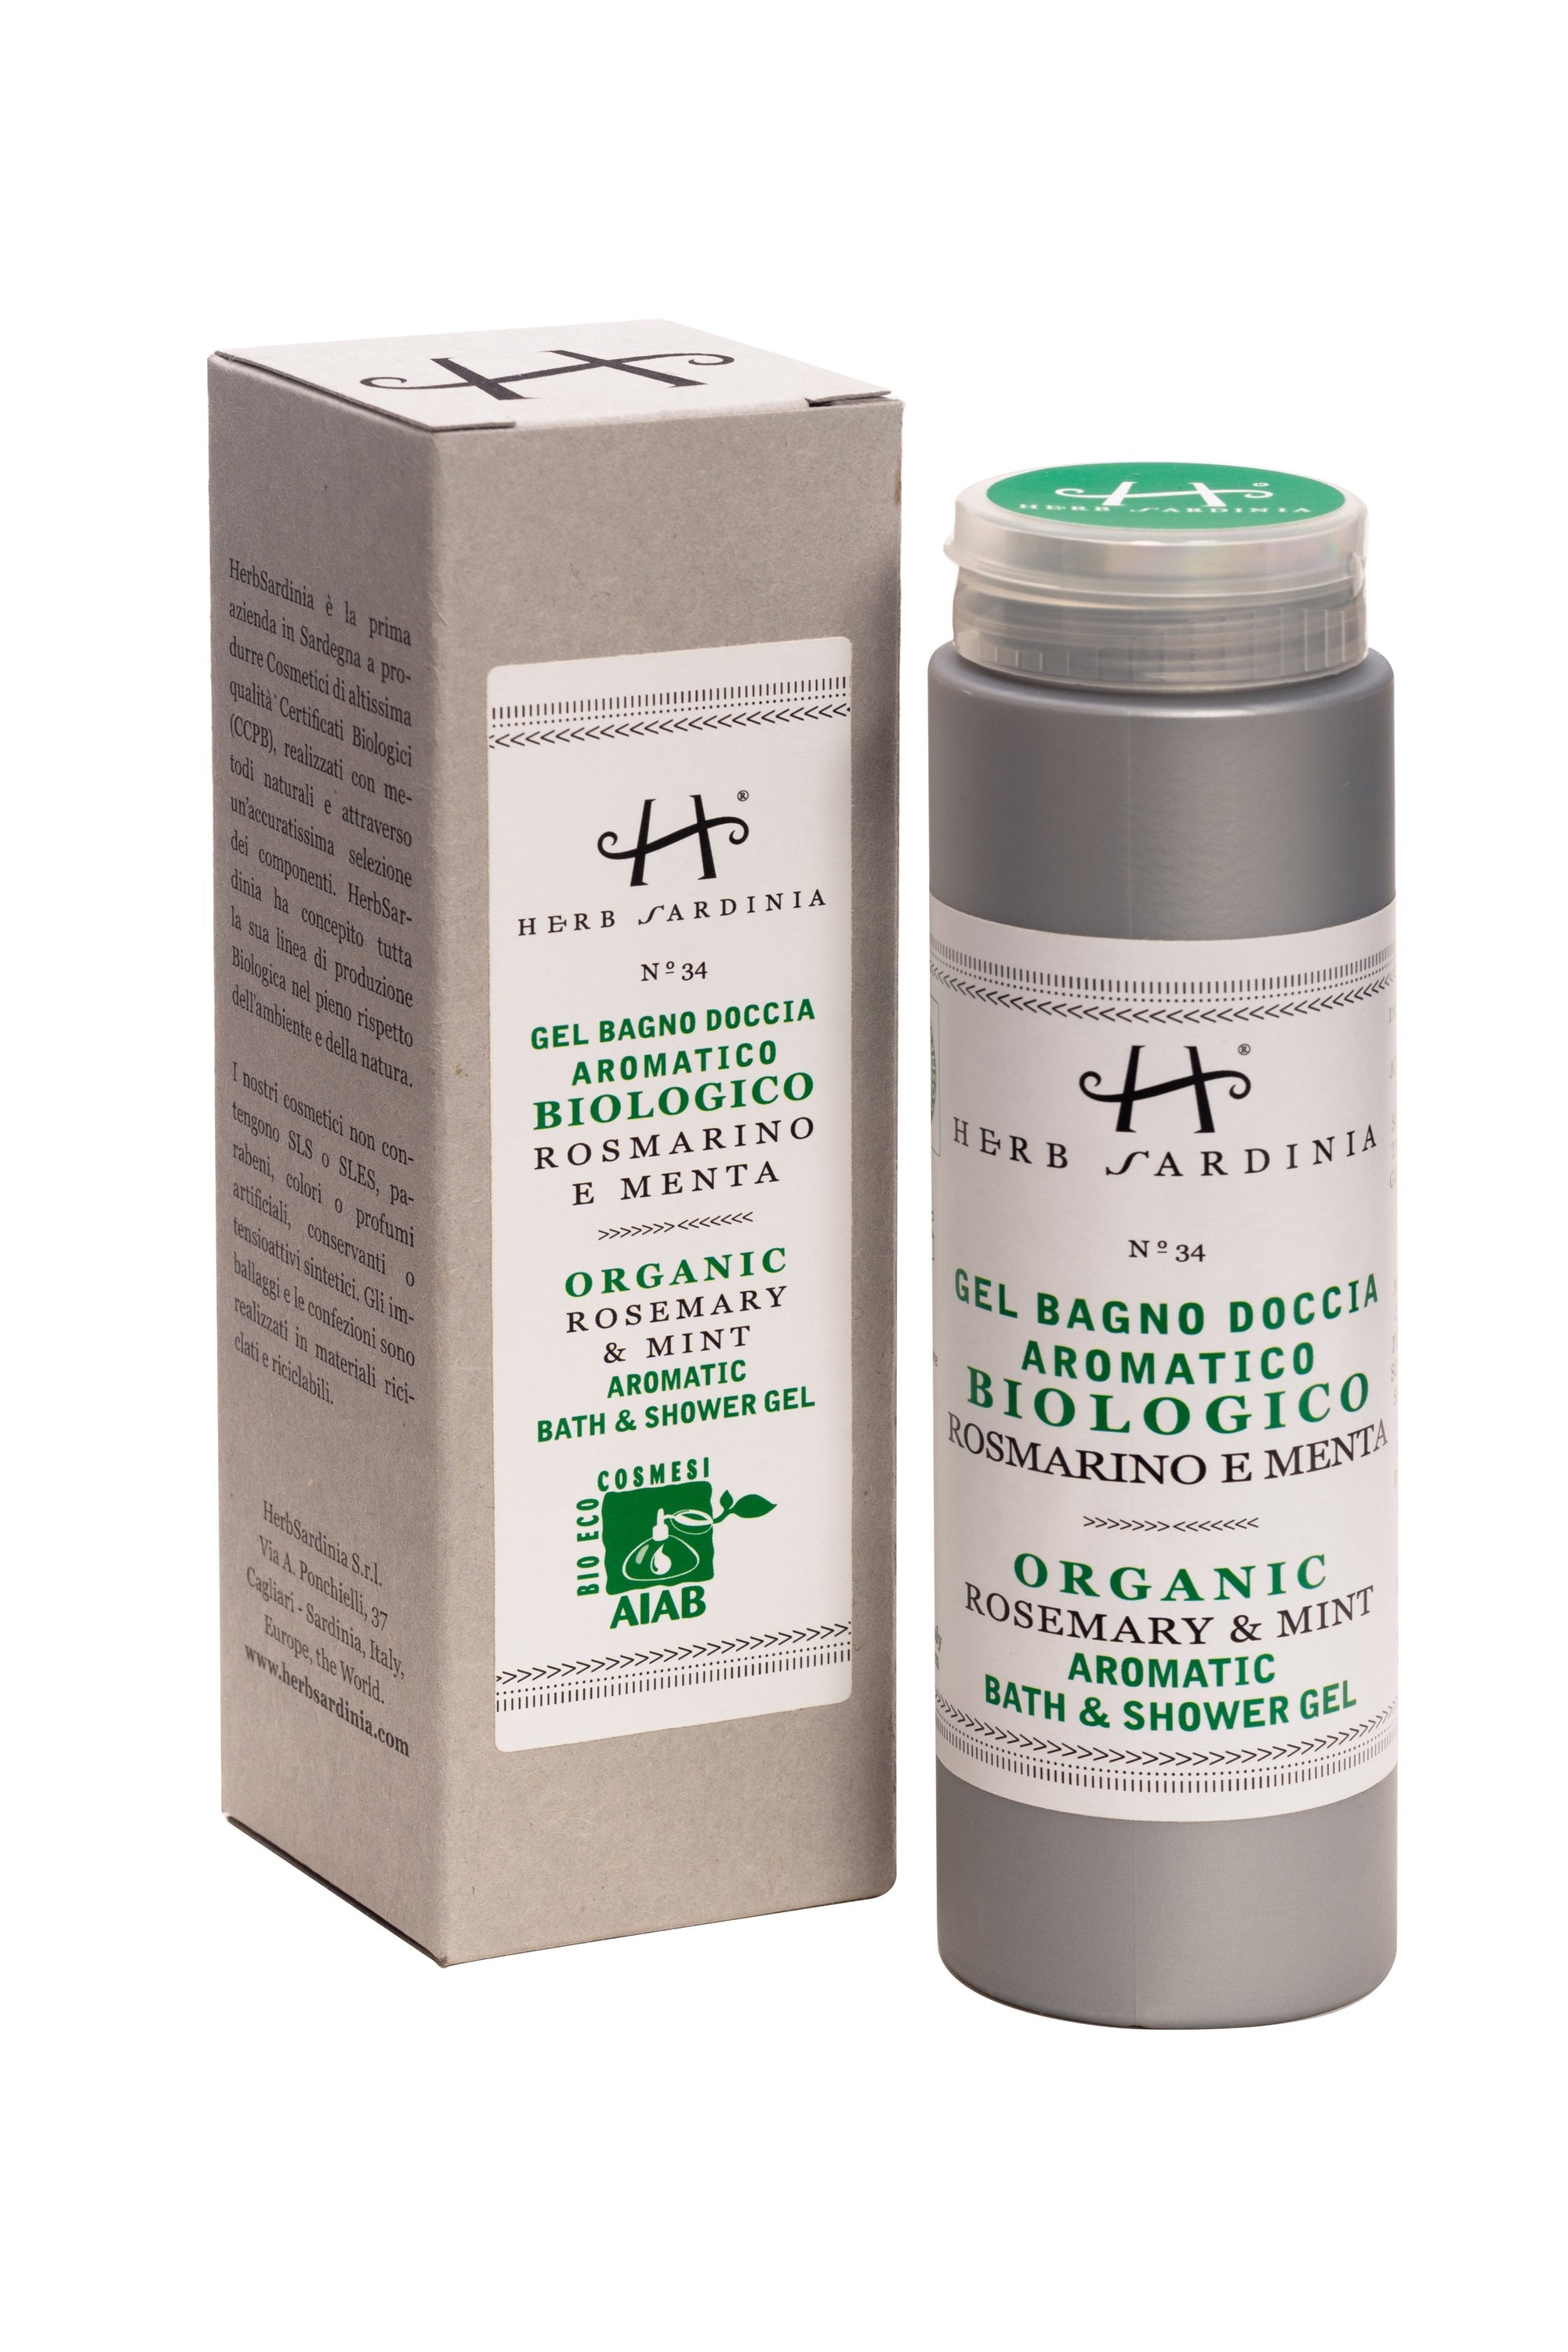 HerbSardinia Organic Rosemary & Mint Bath & Shower Gel